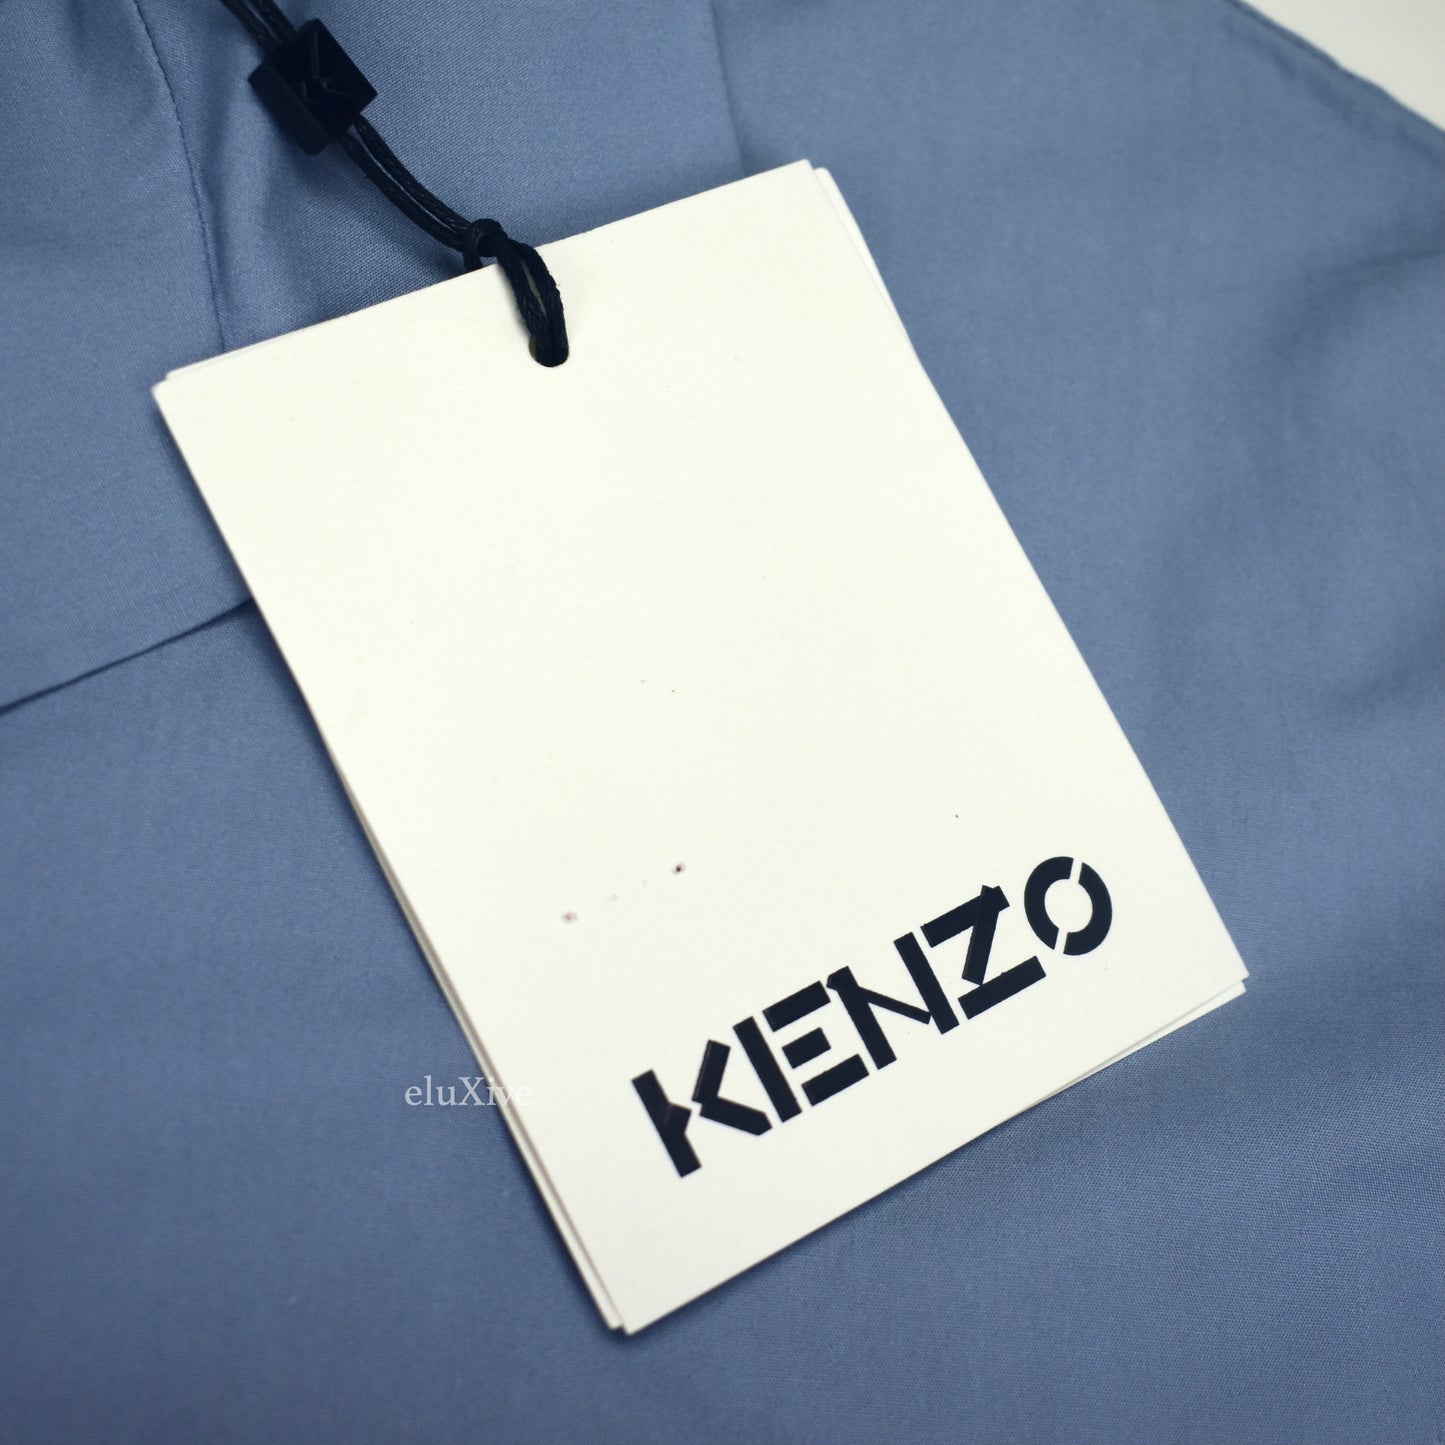 Kenzo - Flame Print Button Down Club Shirt